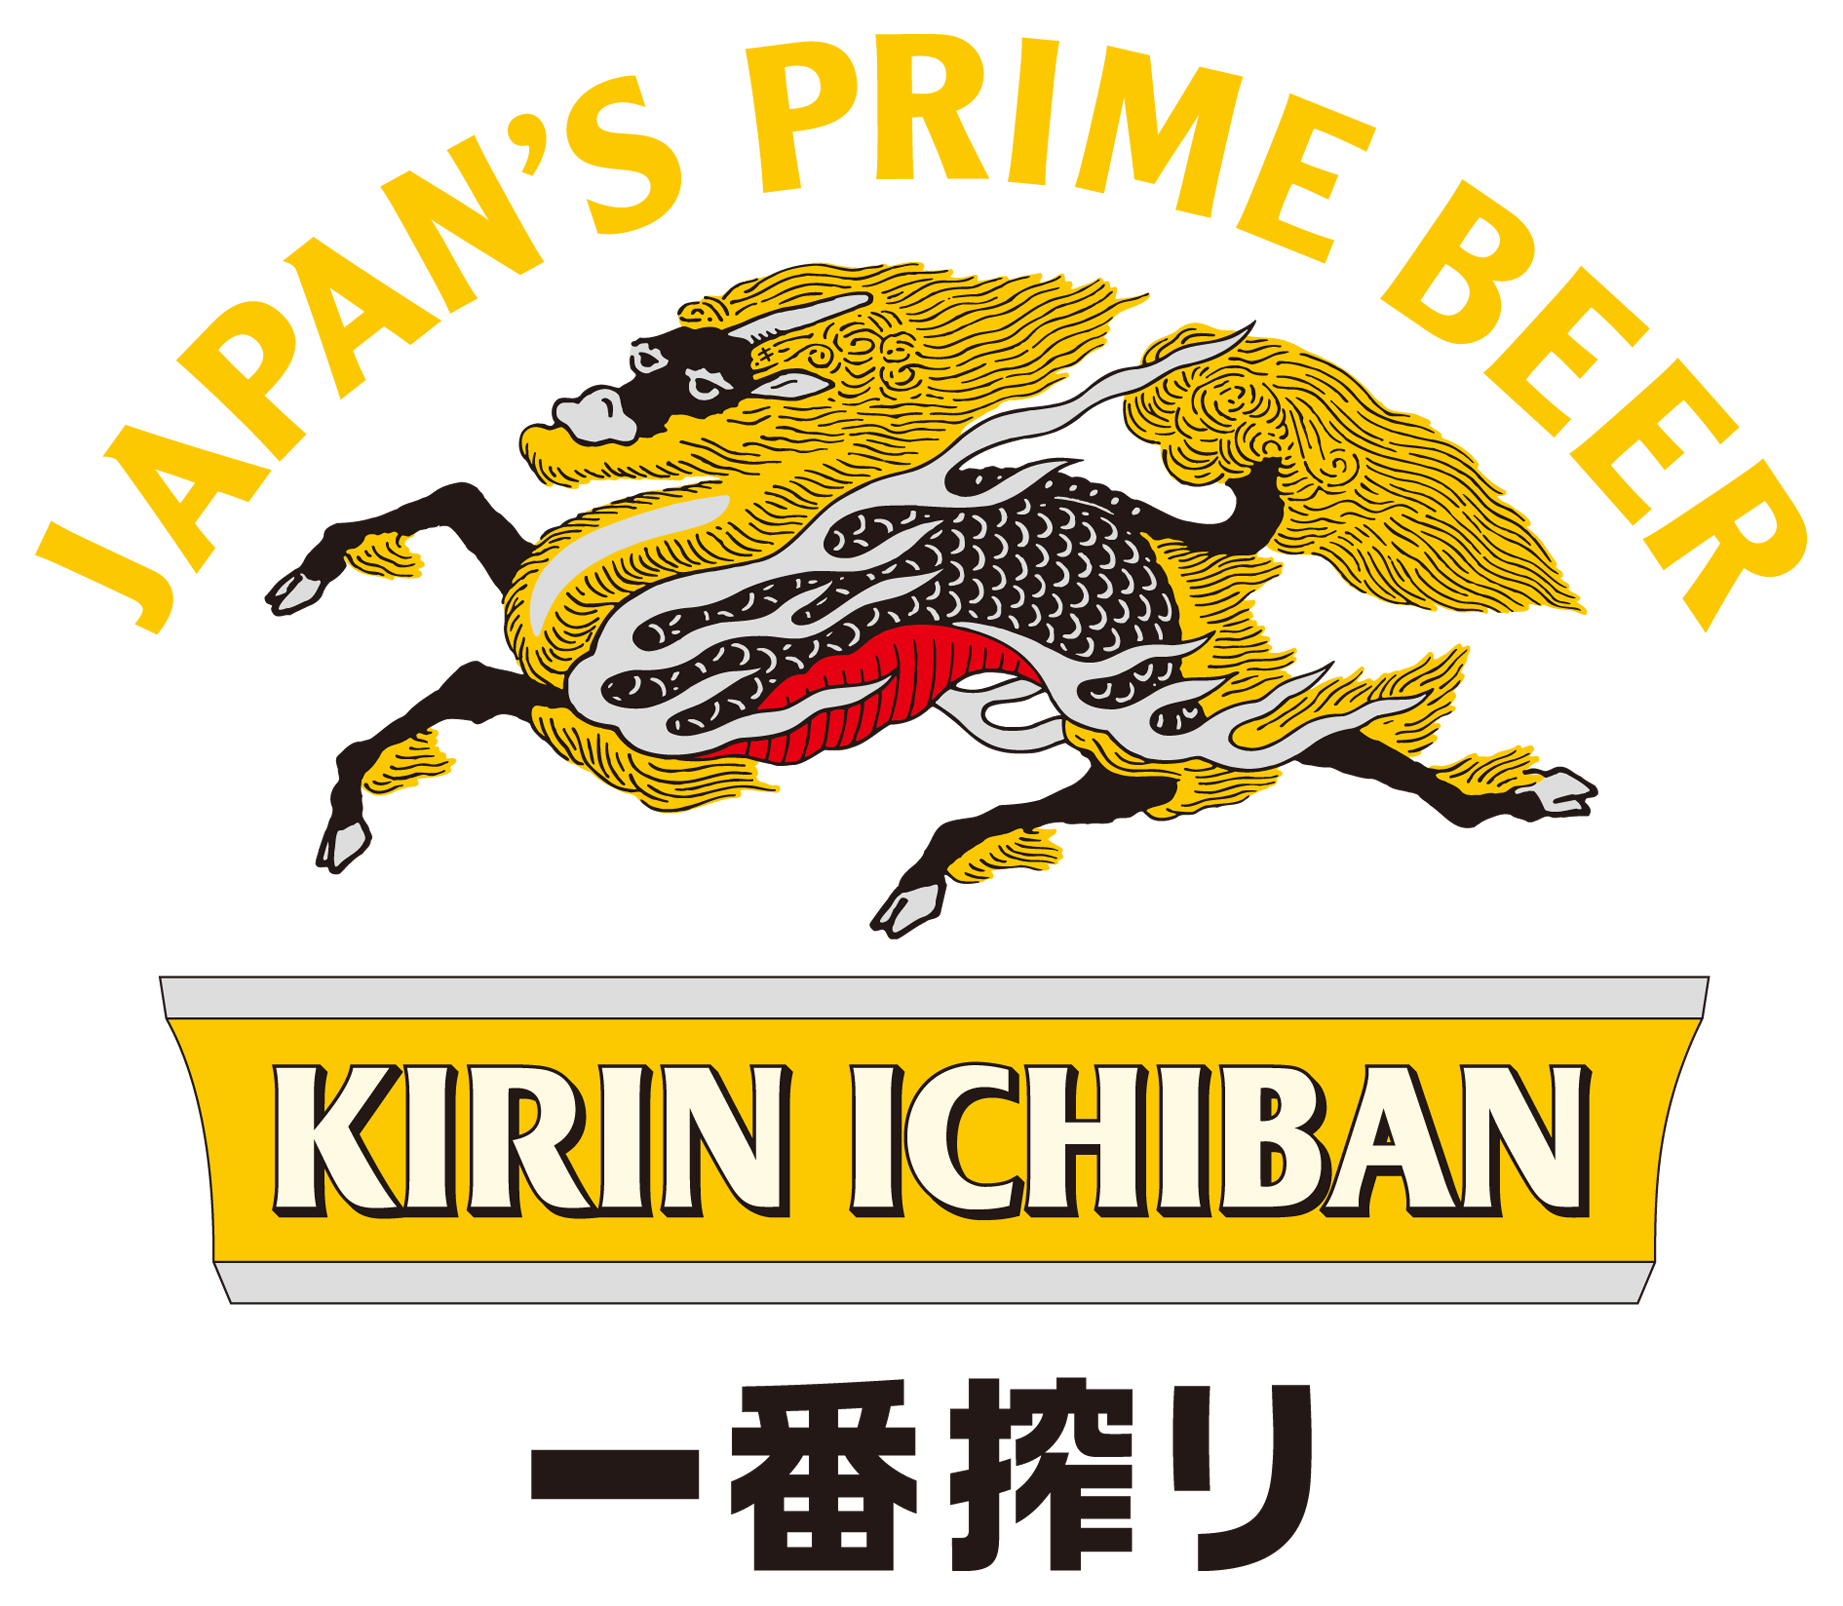 Kirin Ichiban - Brewery International